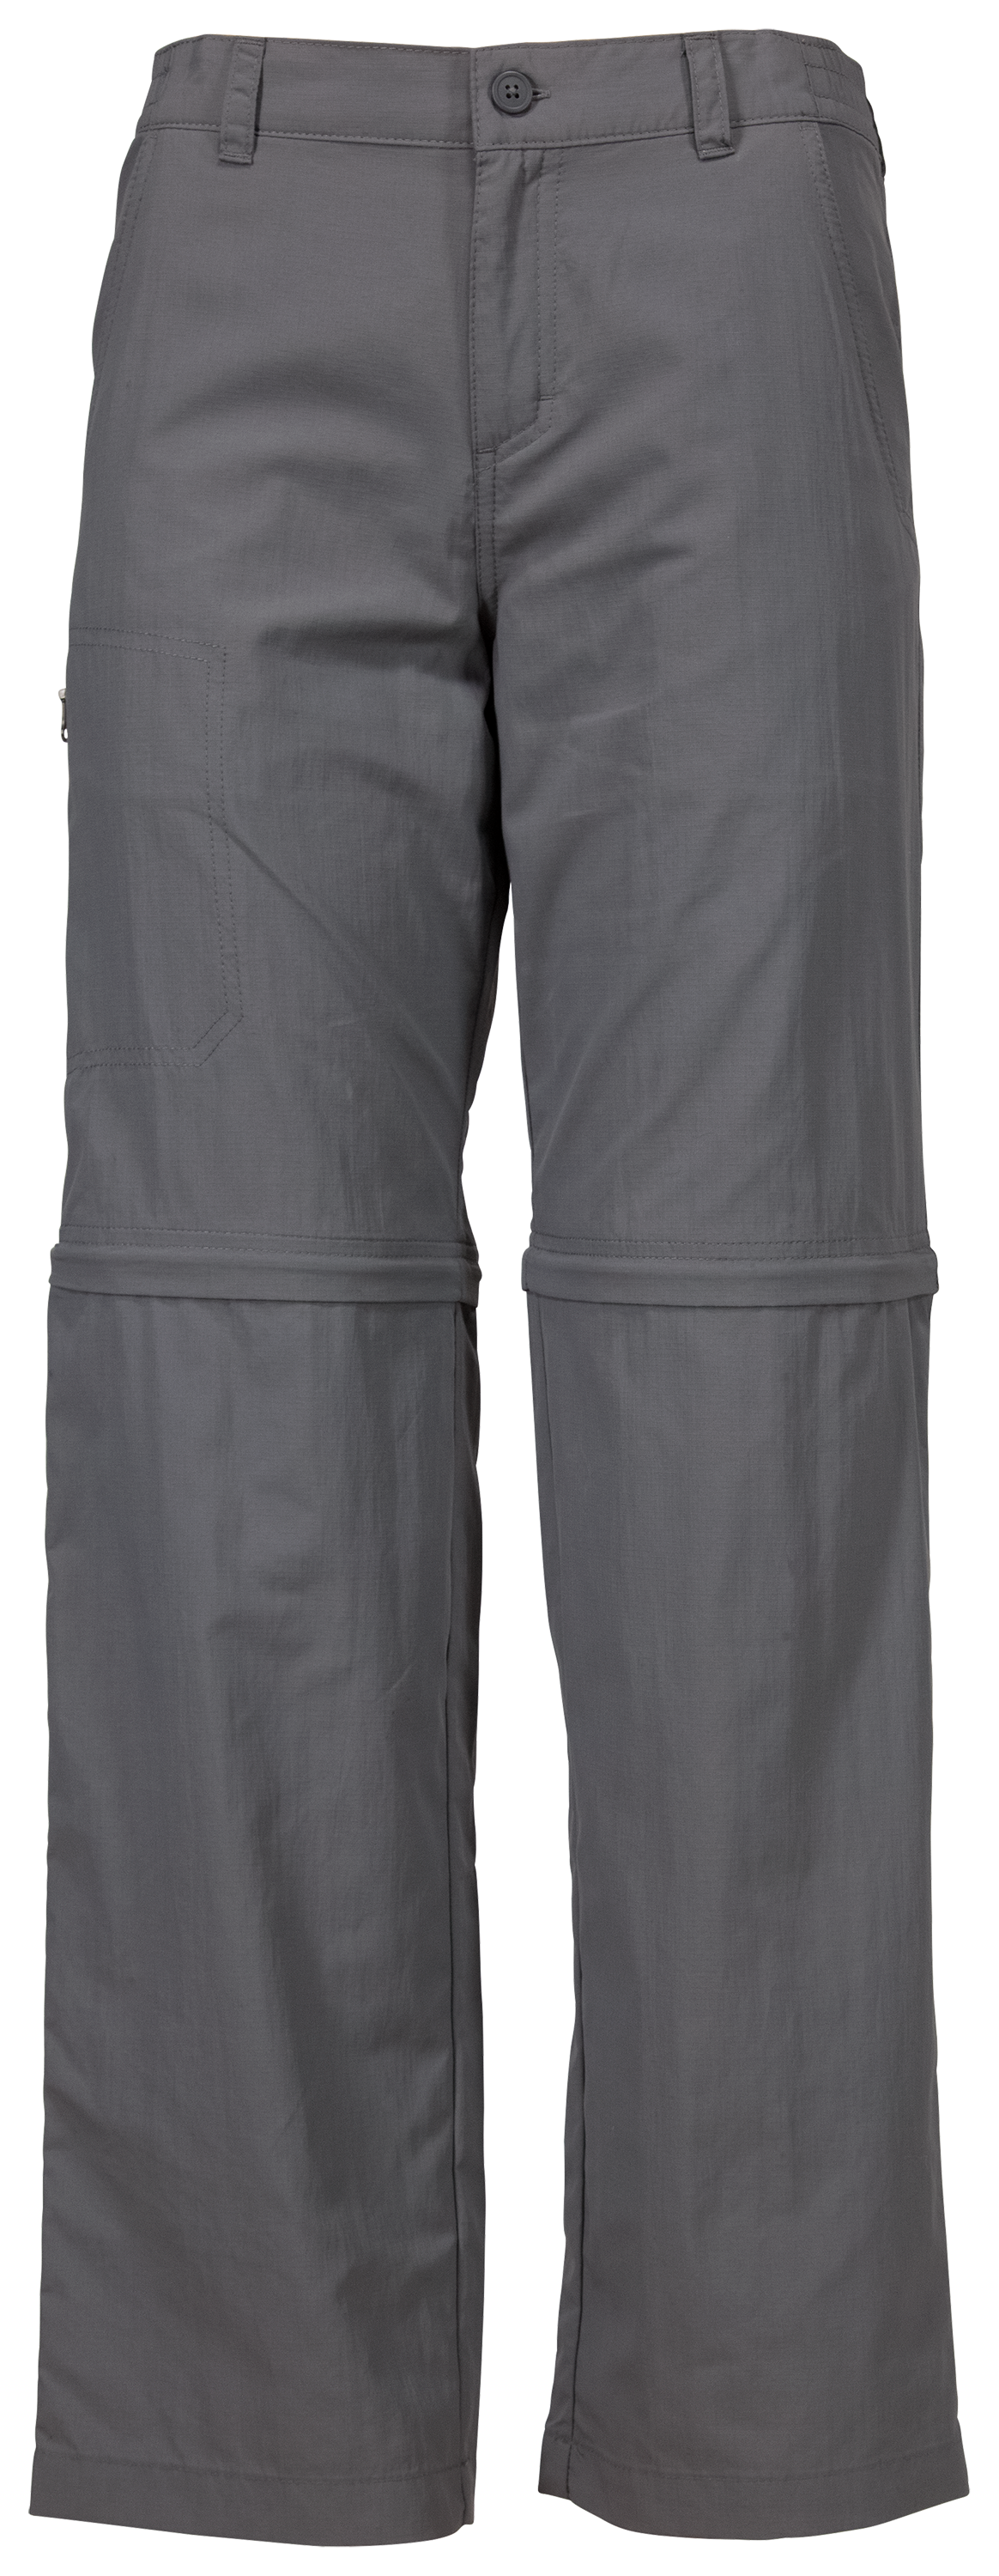 Columbia Silver Ridge IV Convertible Pants for Boys - City Grey - S